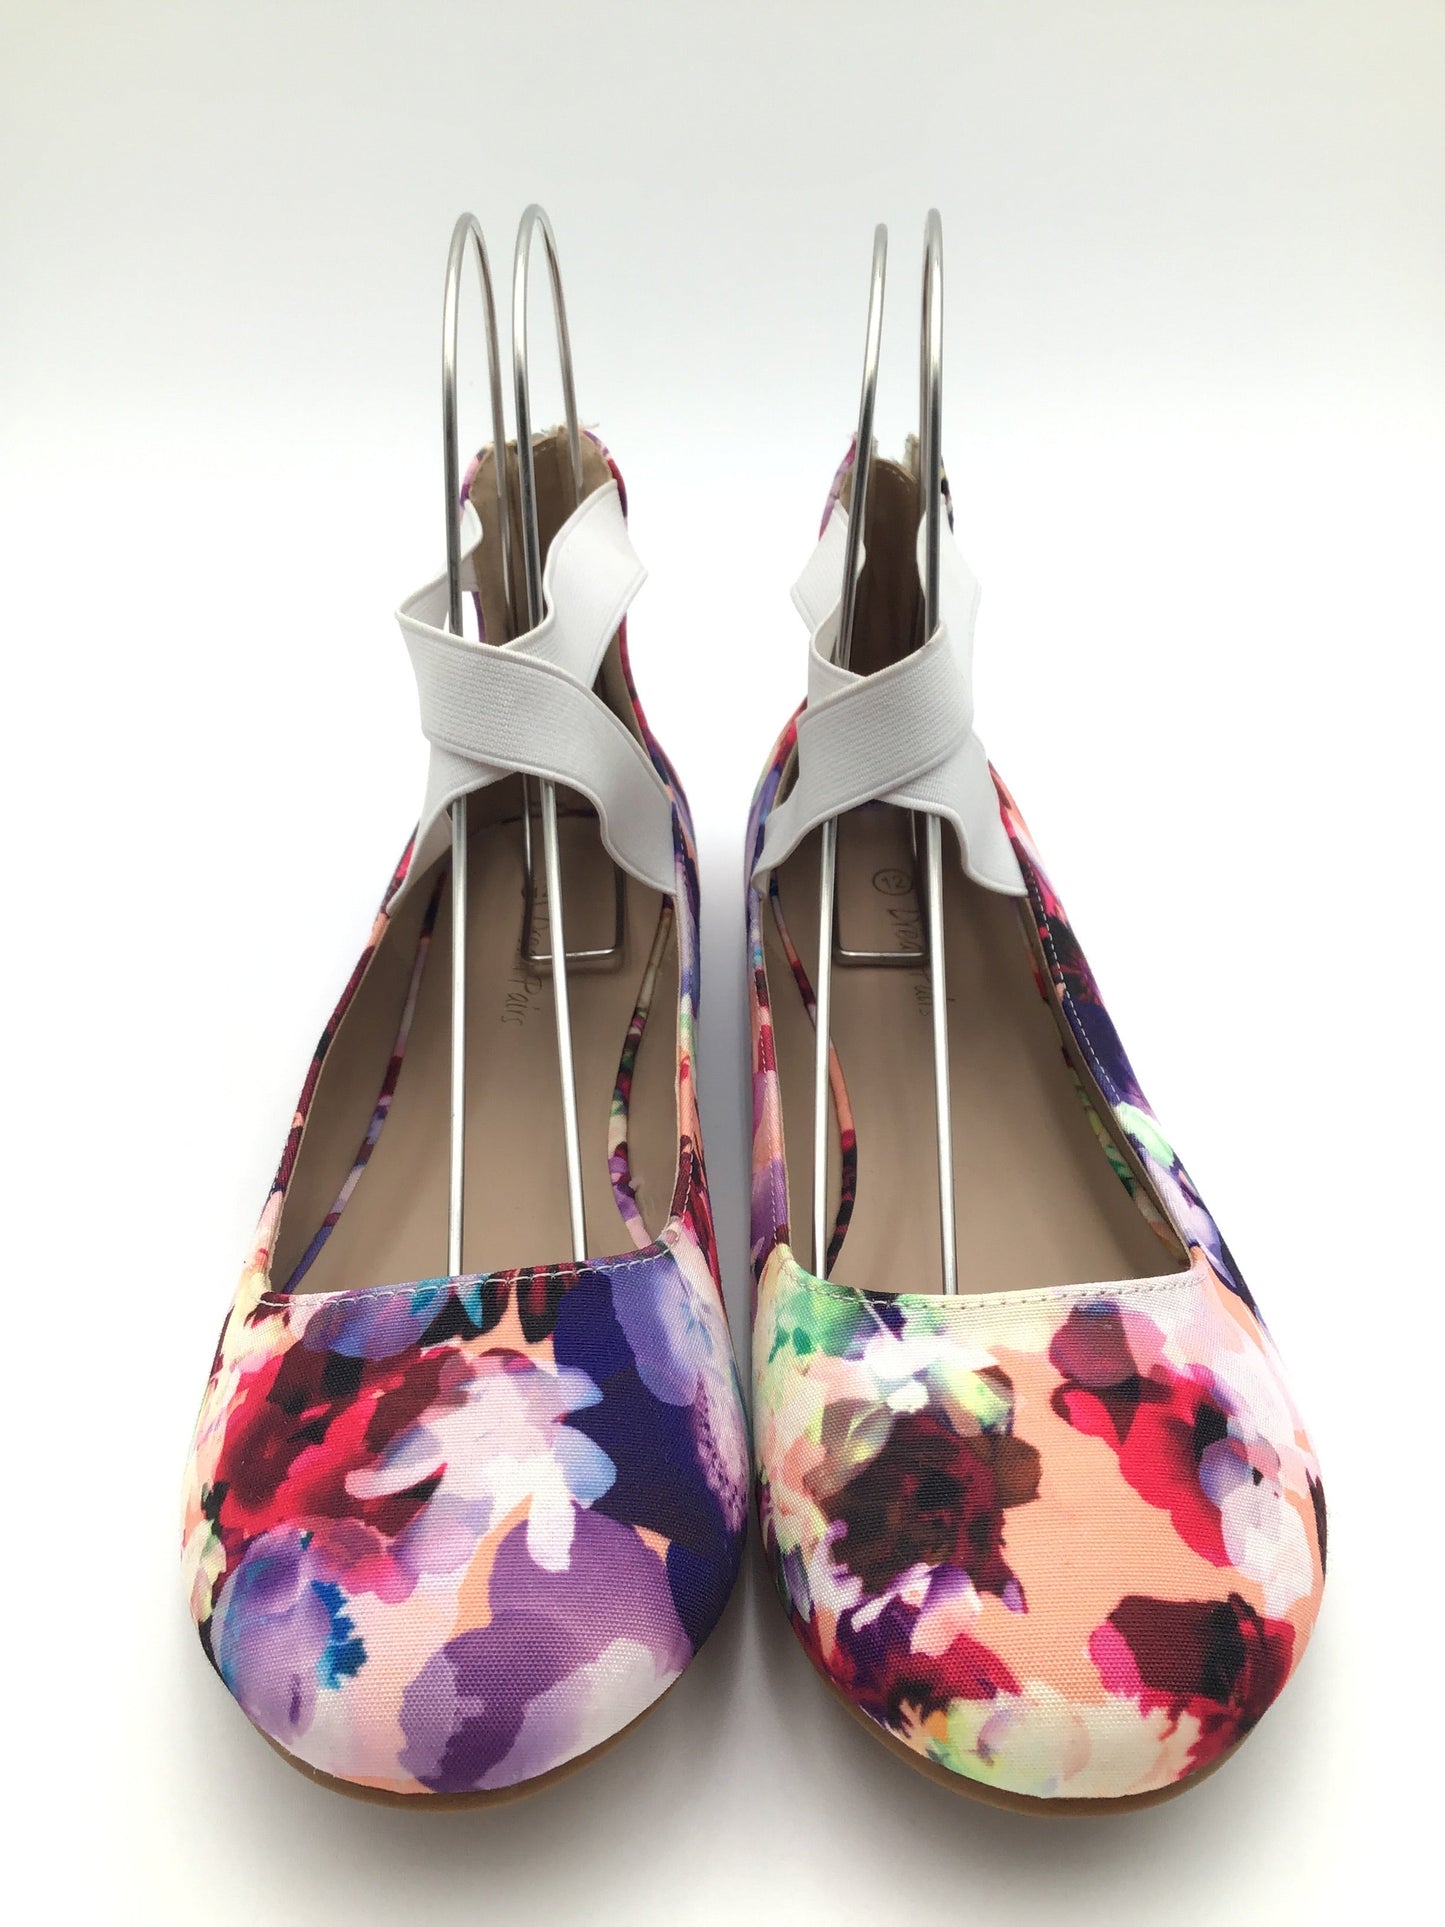 Floral Print Shoes Flats Clothes Mentor, Size 12